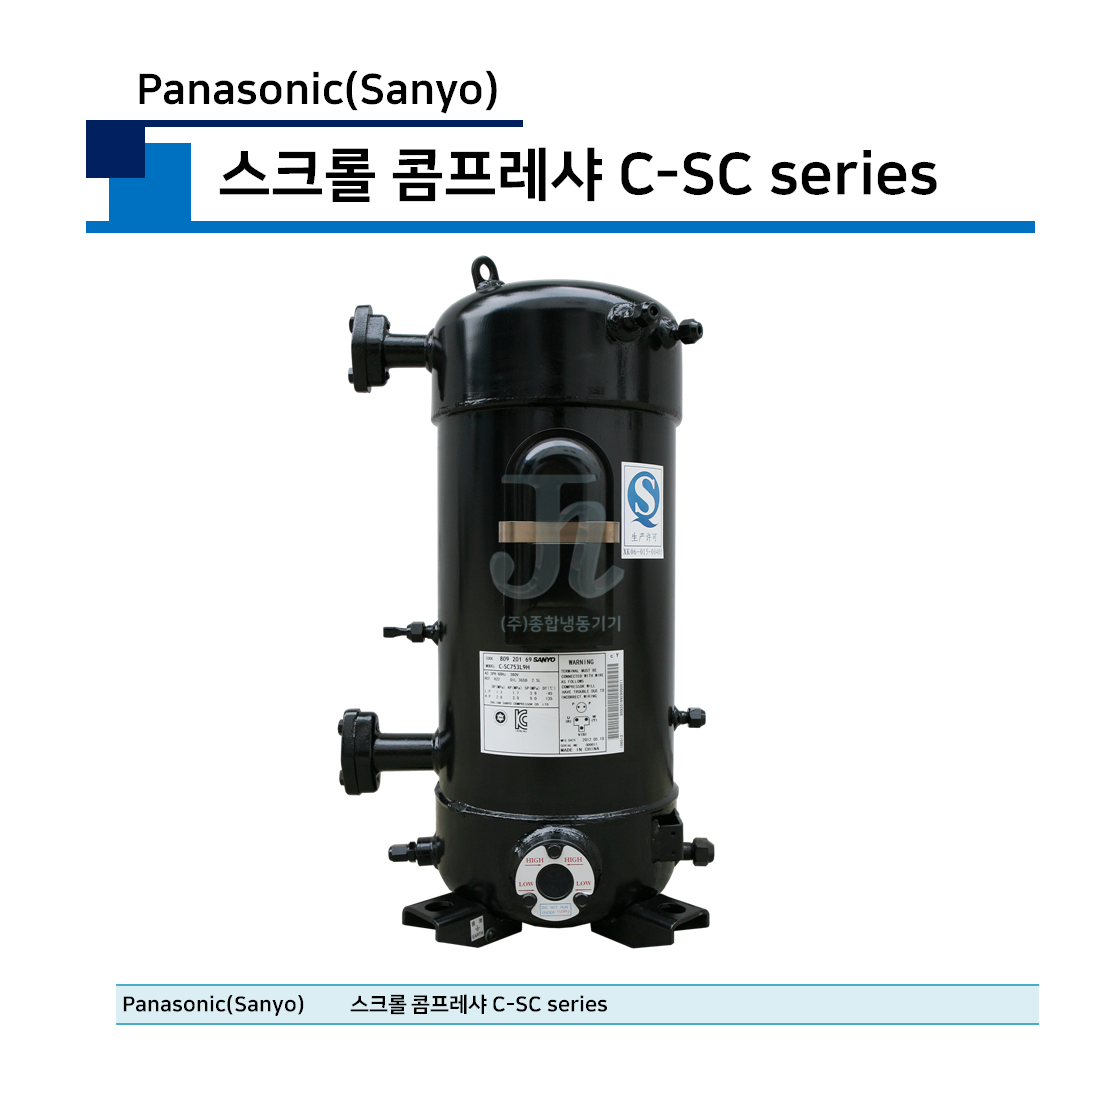 Panasonic(Sanyo) 스크롤 콤프레샤 C-SC series